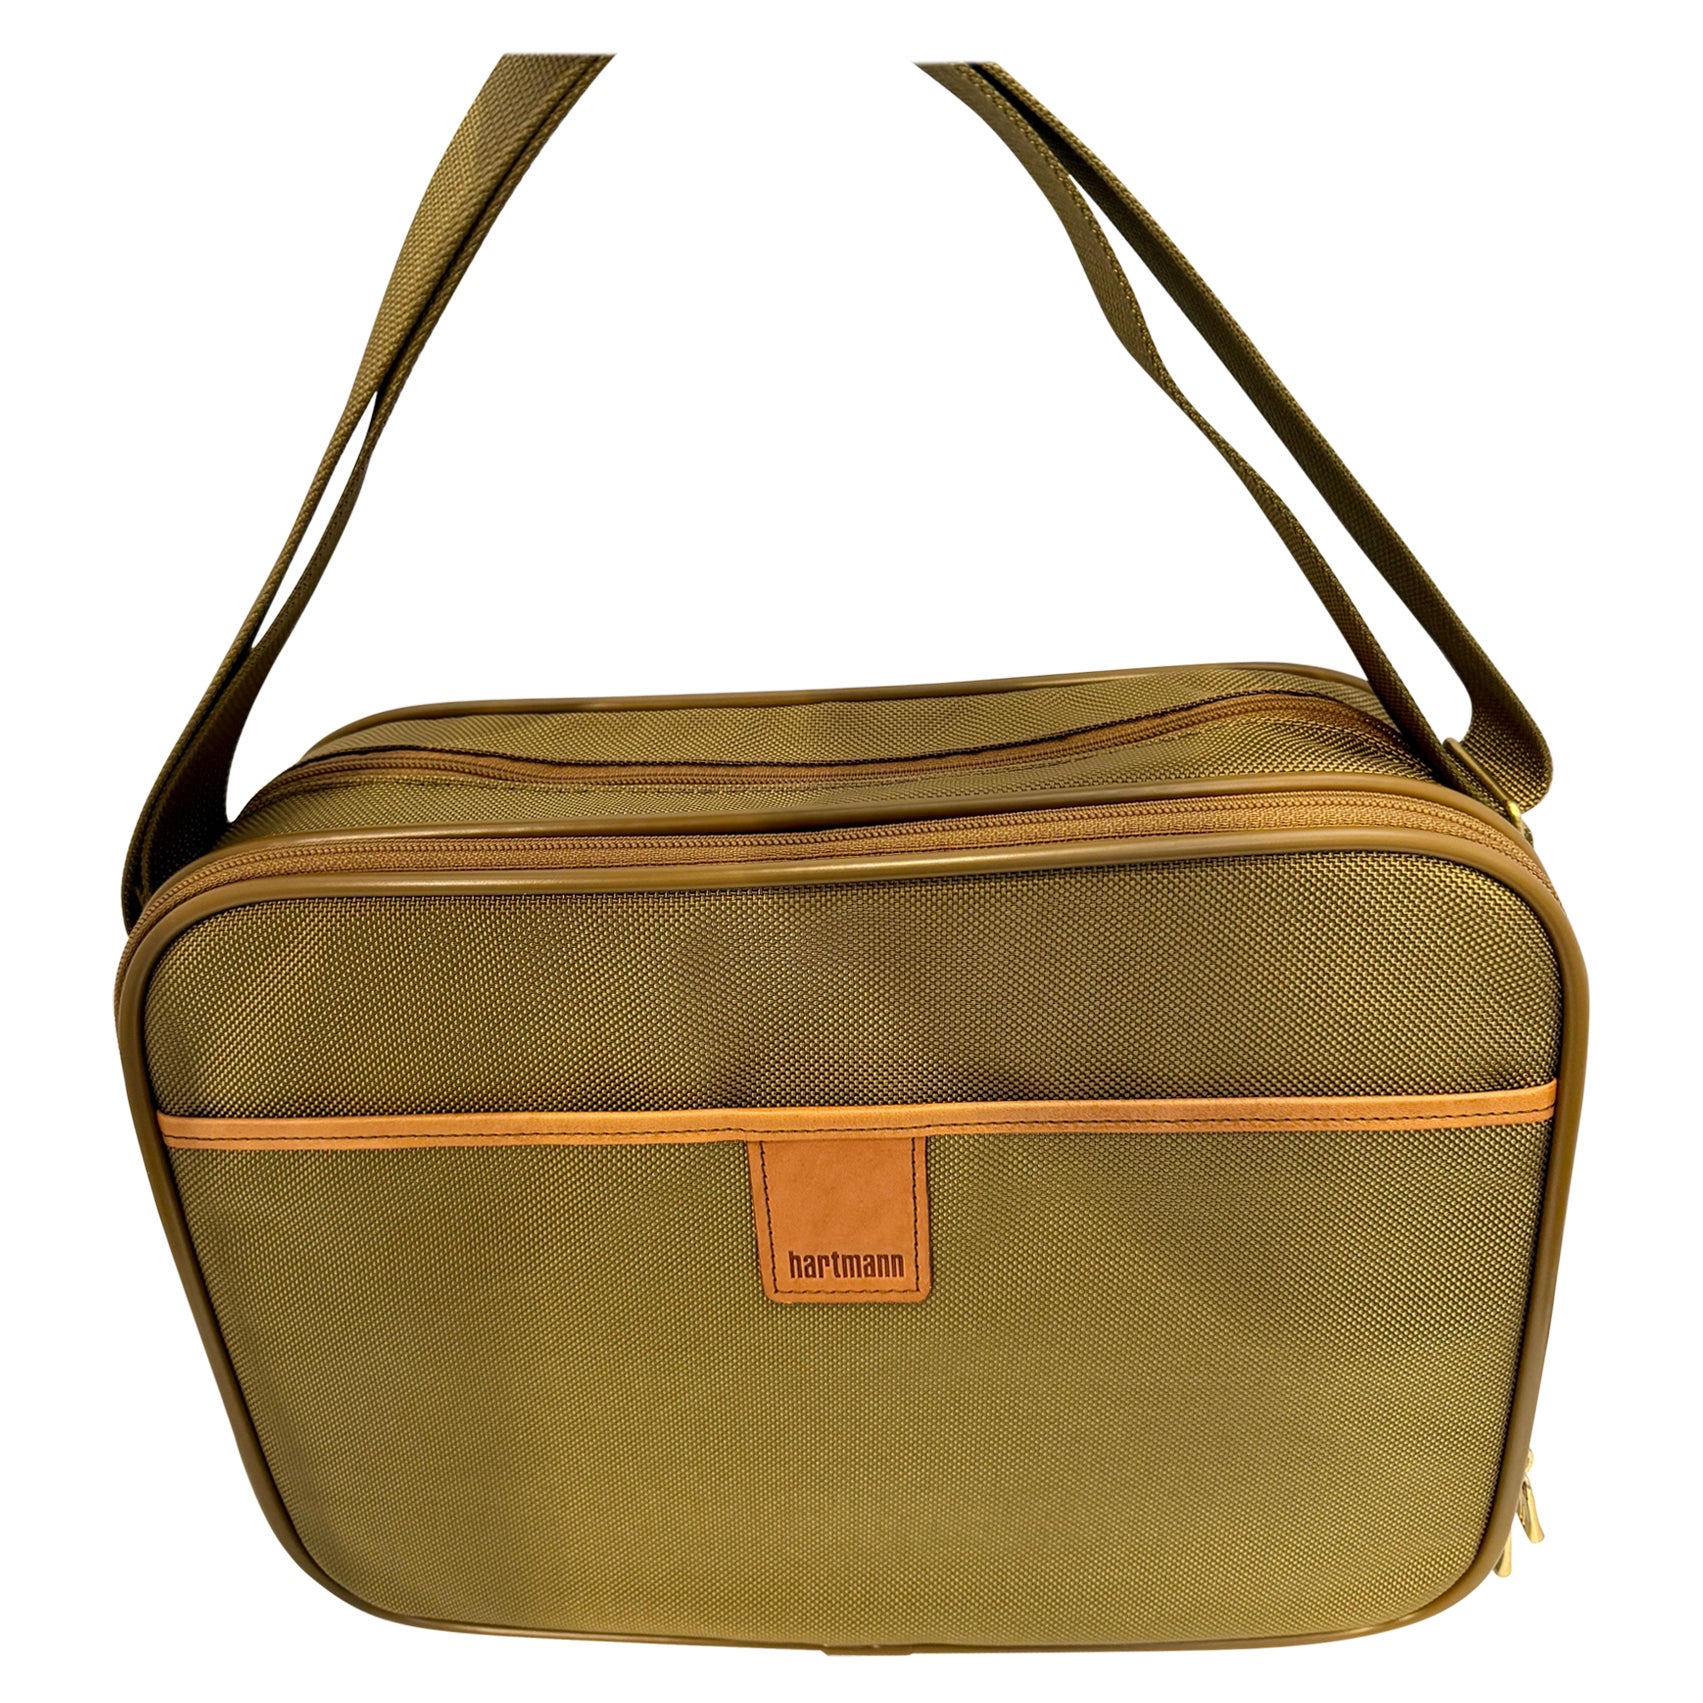 Hartman Carryon  5011 Nylon International Traveler small bag Brand New in a Box For Sale